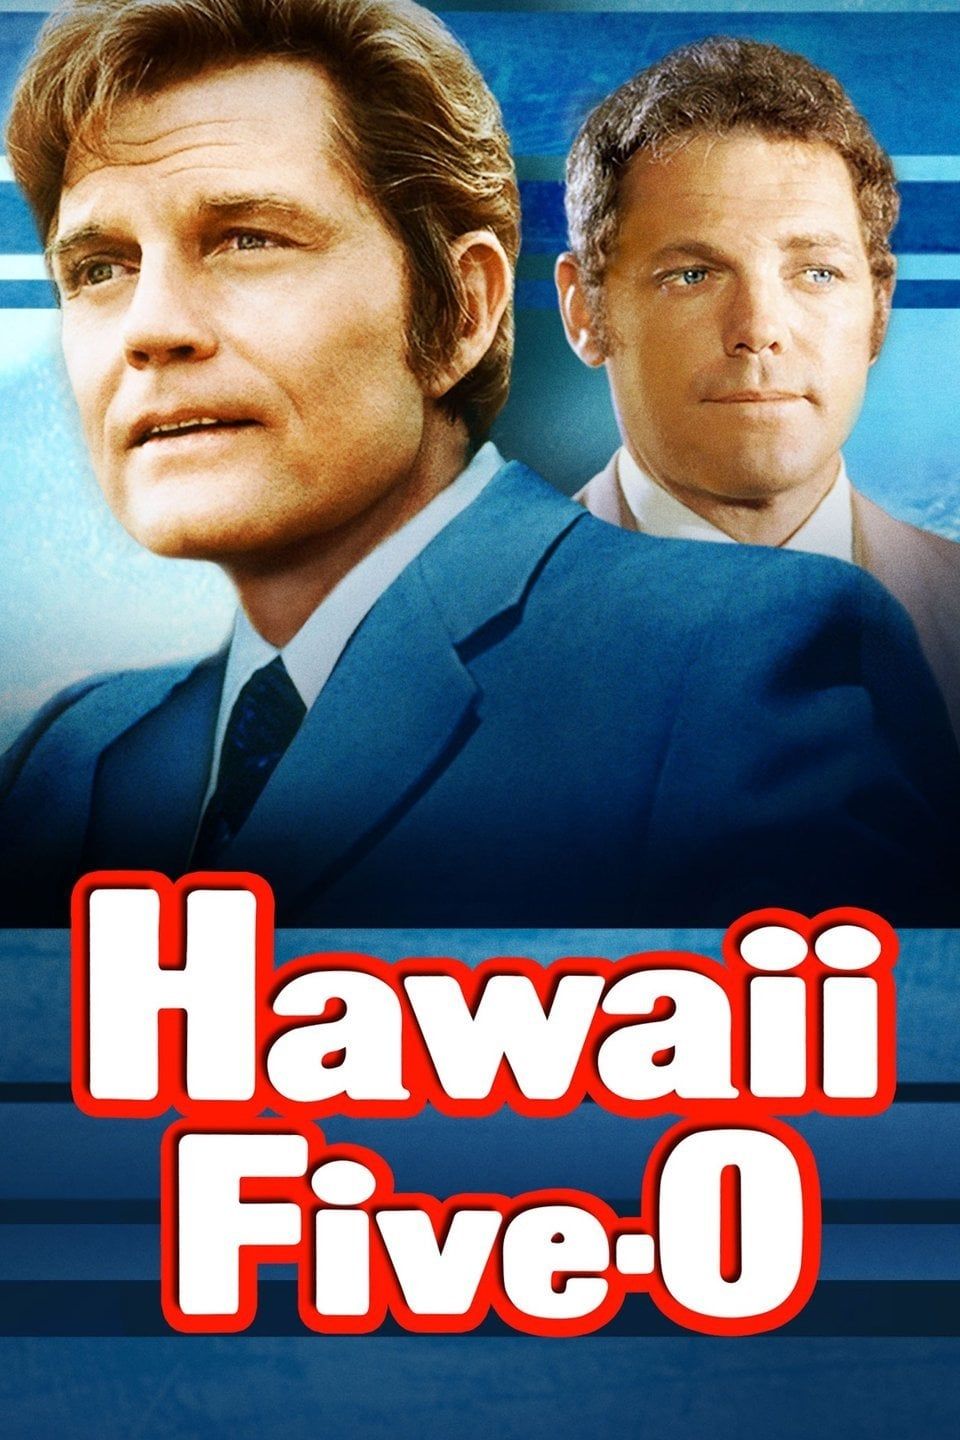 hawaii fiveo (1968) MovieWeb